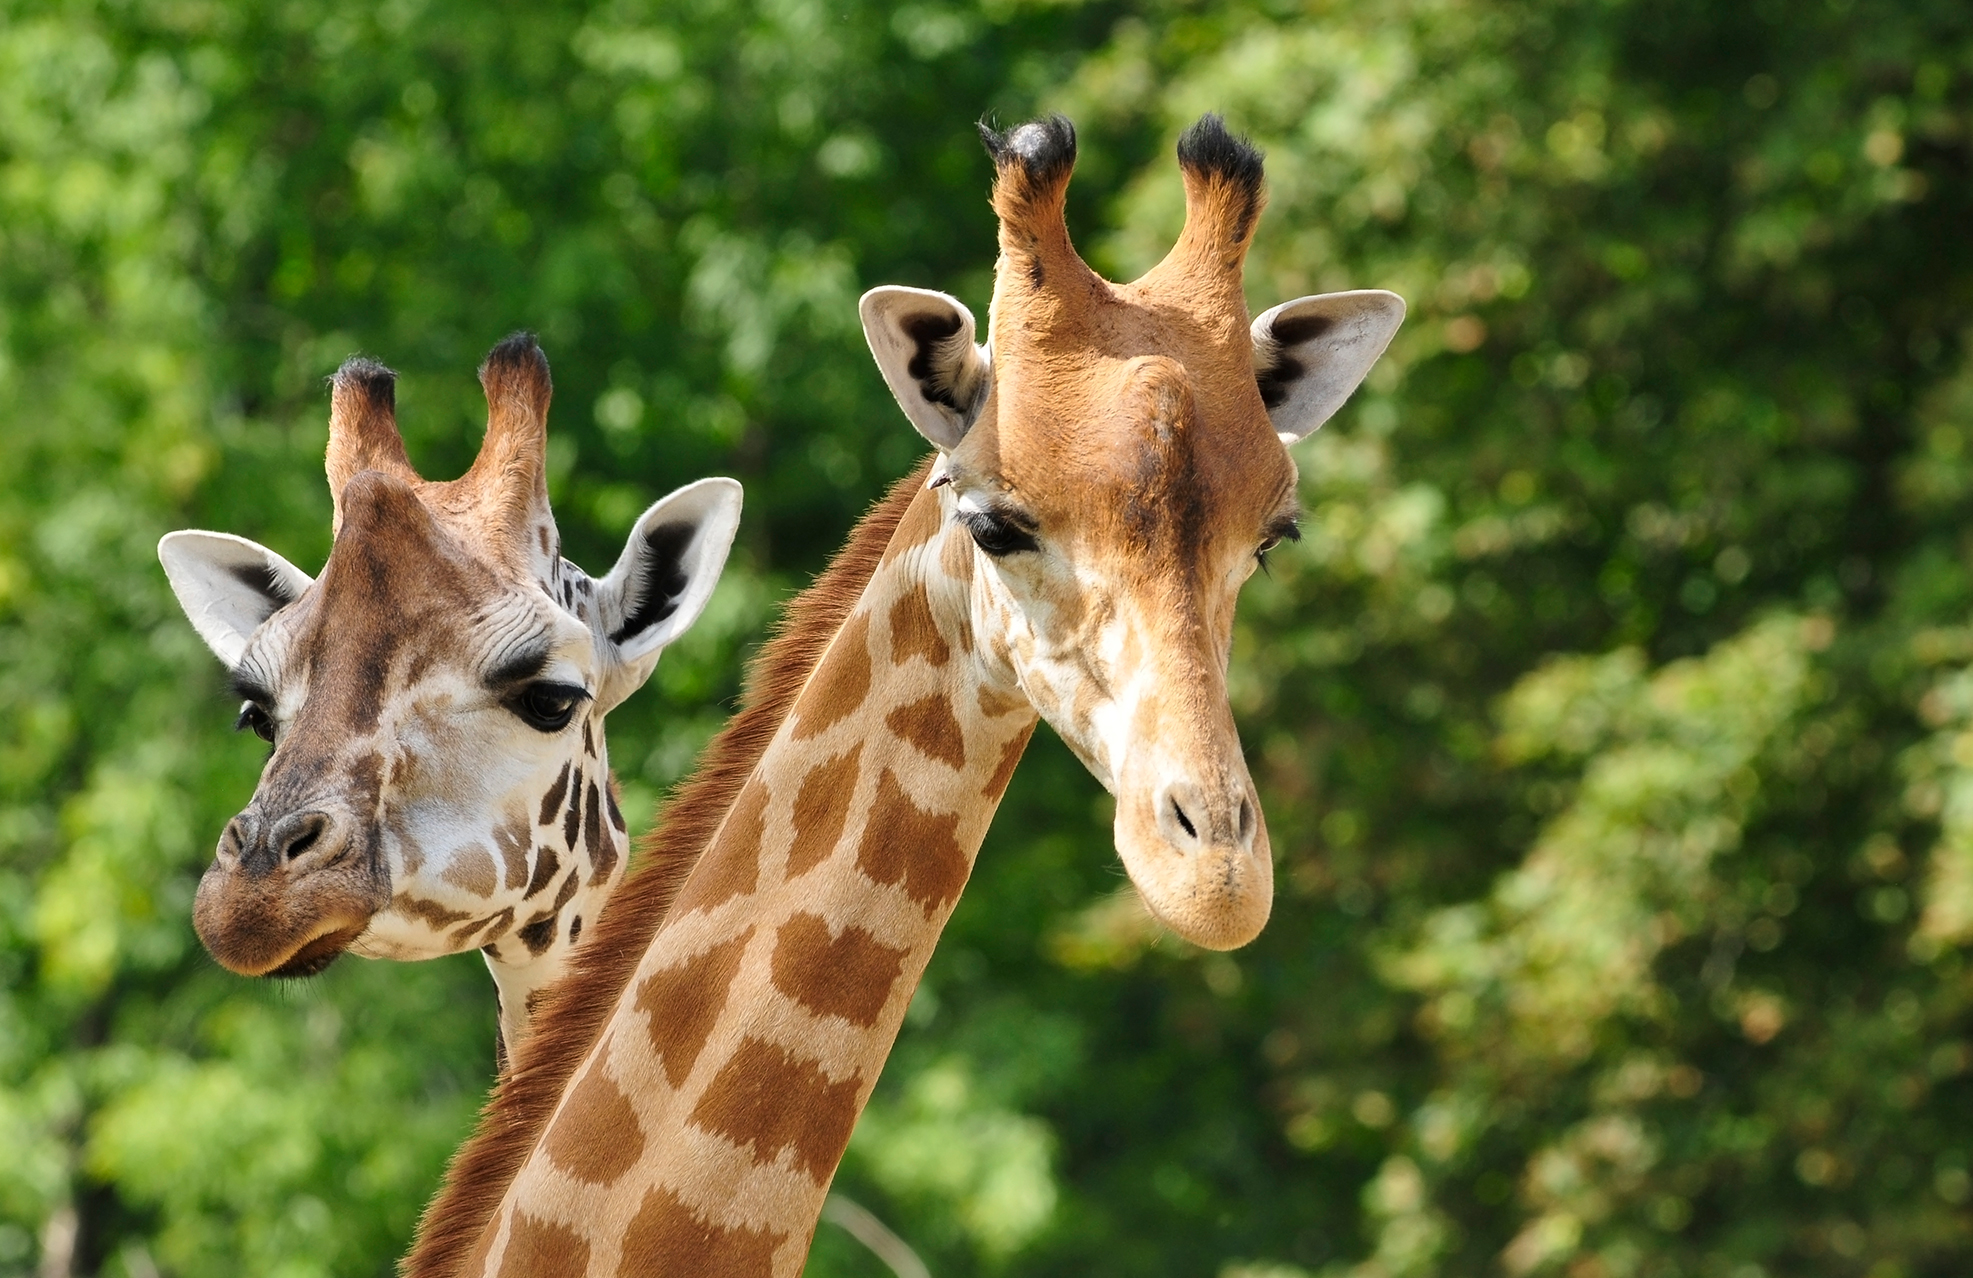 Close-up on giraffes